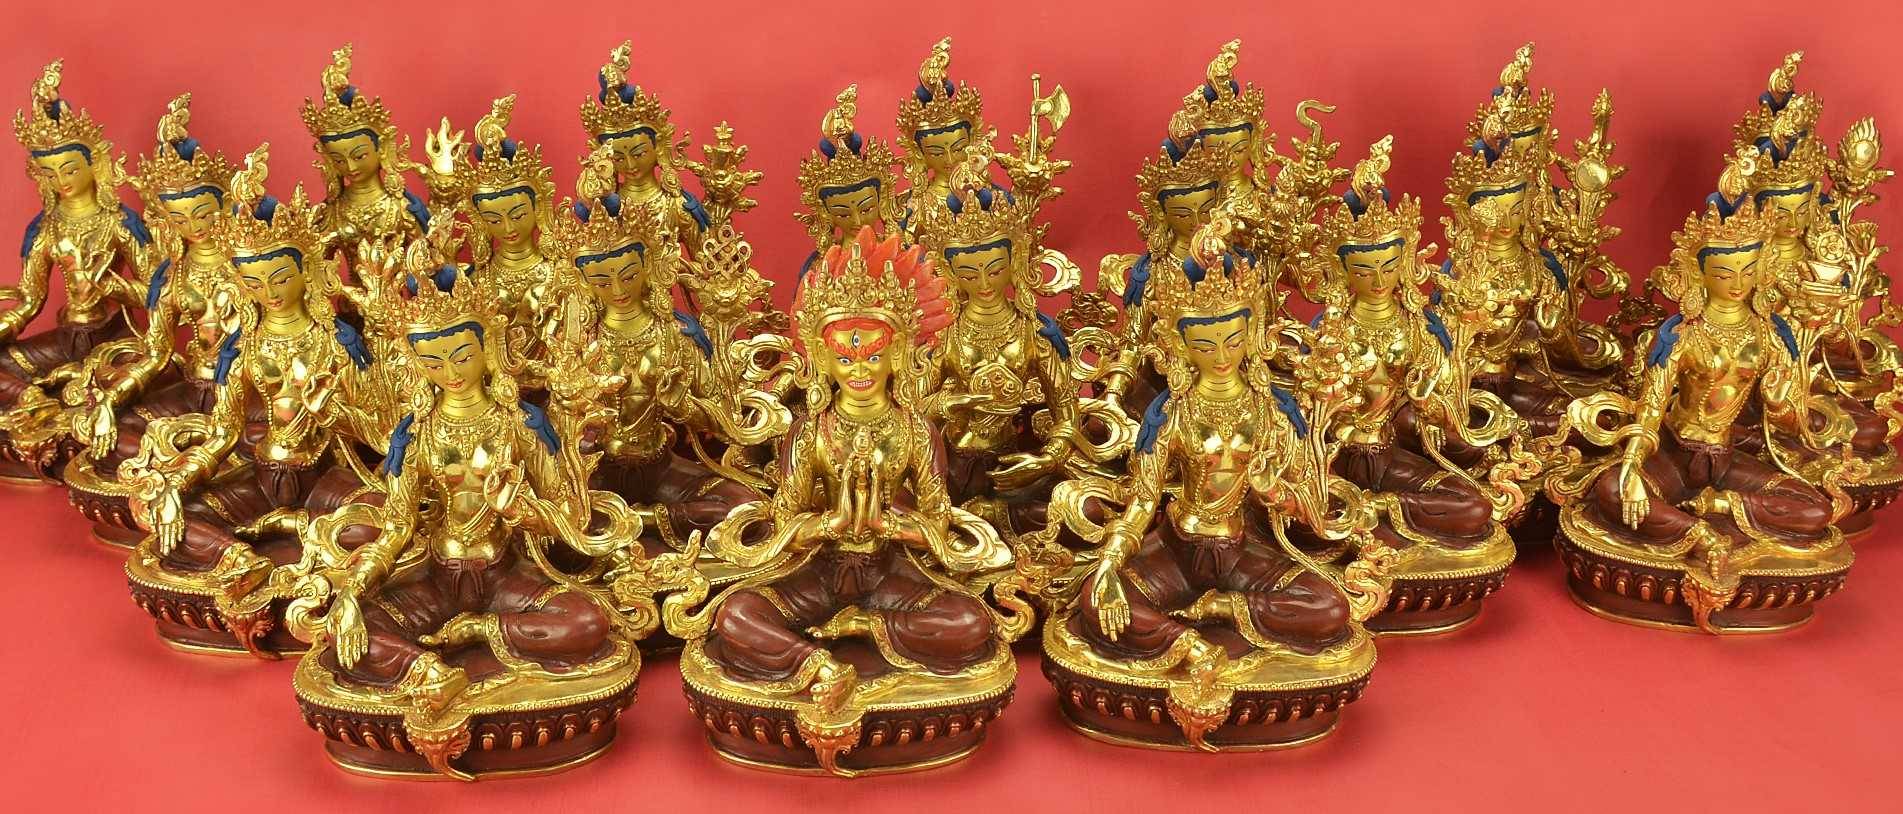 21 Tara Statues set, 24K gold gilded